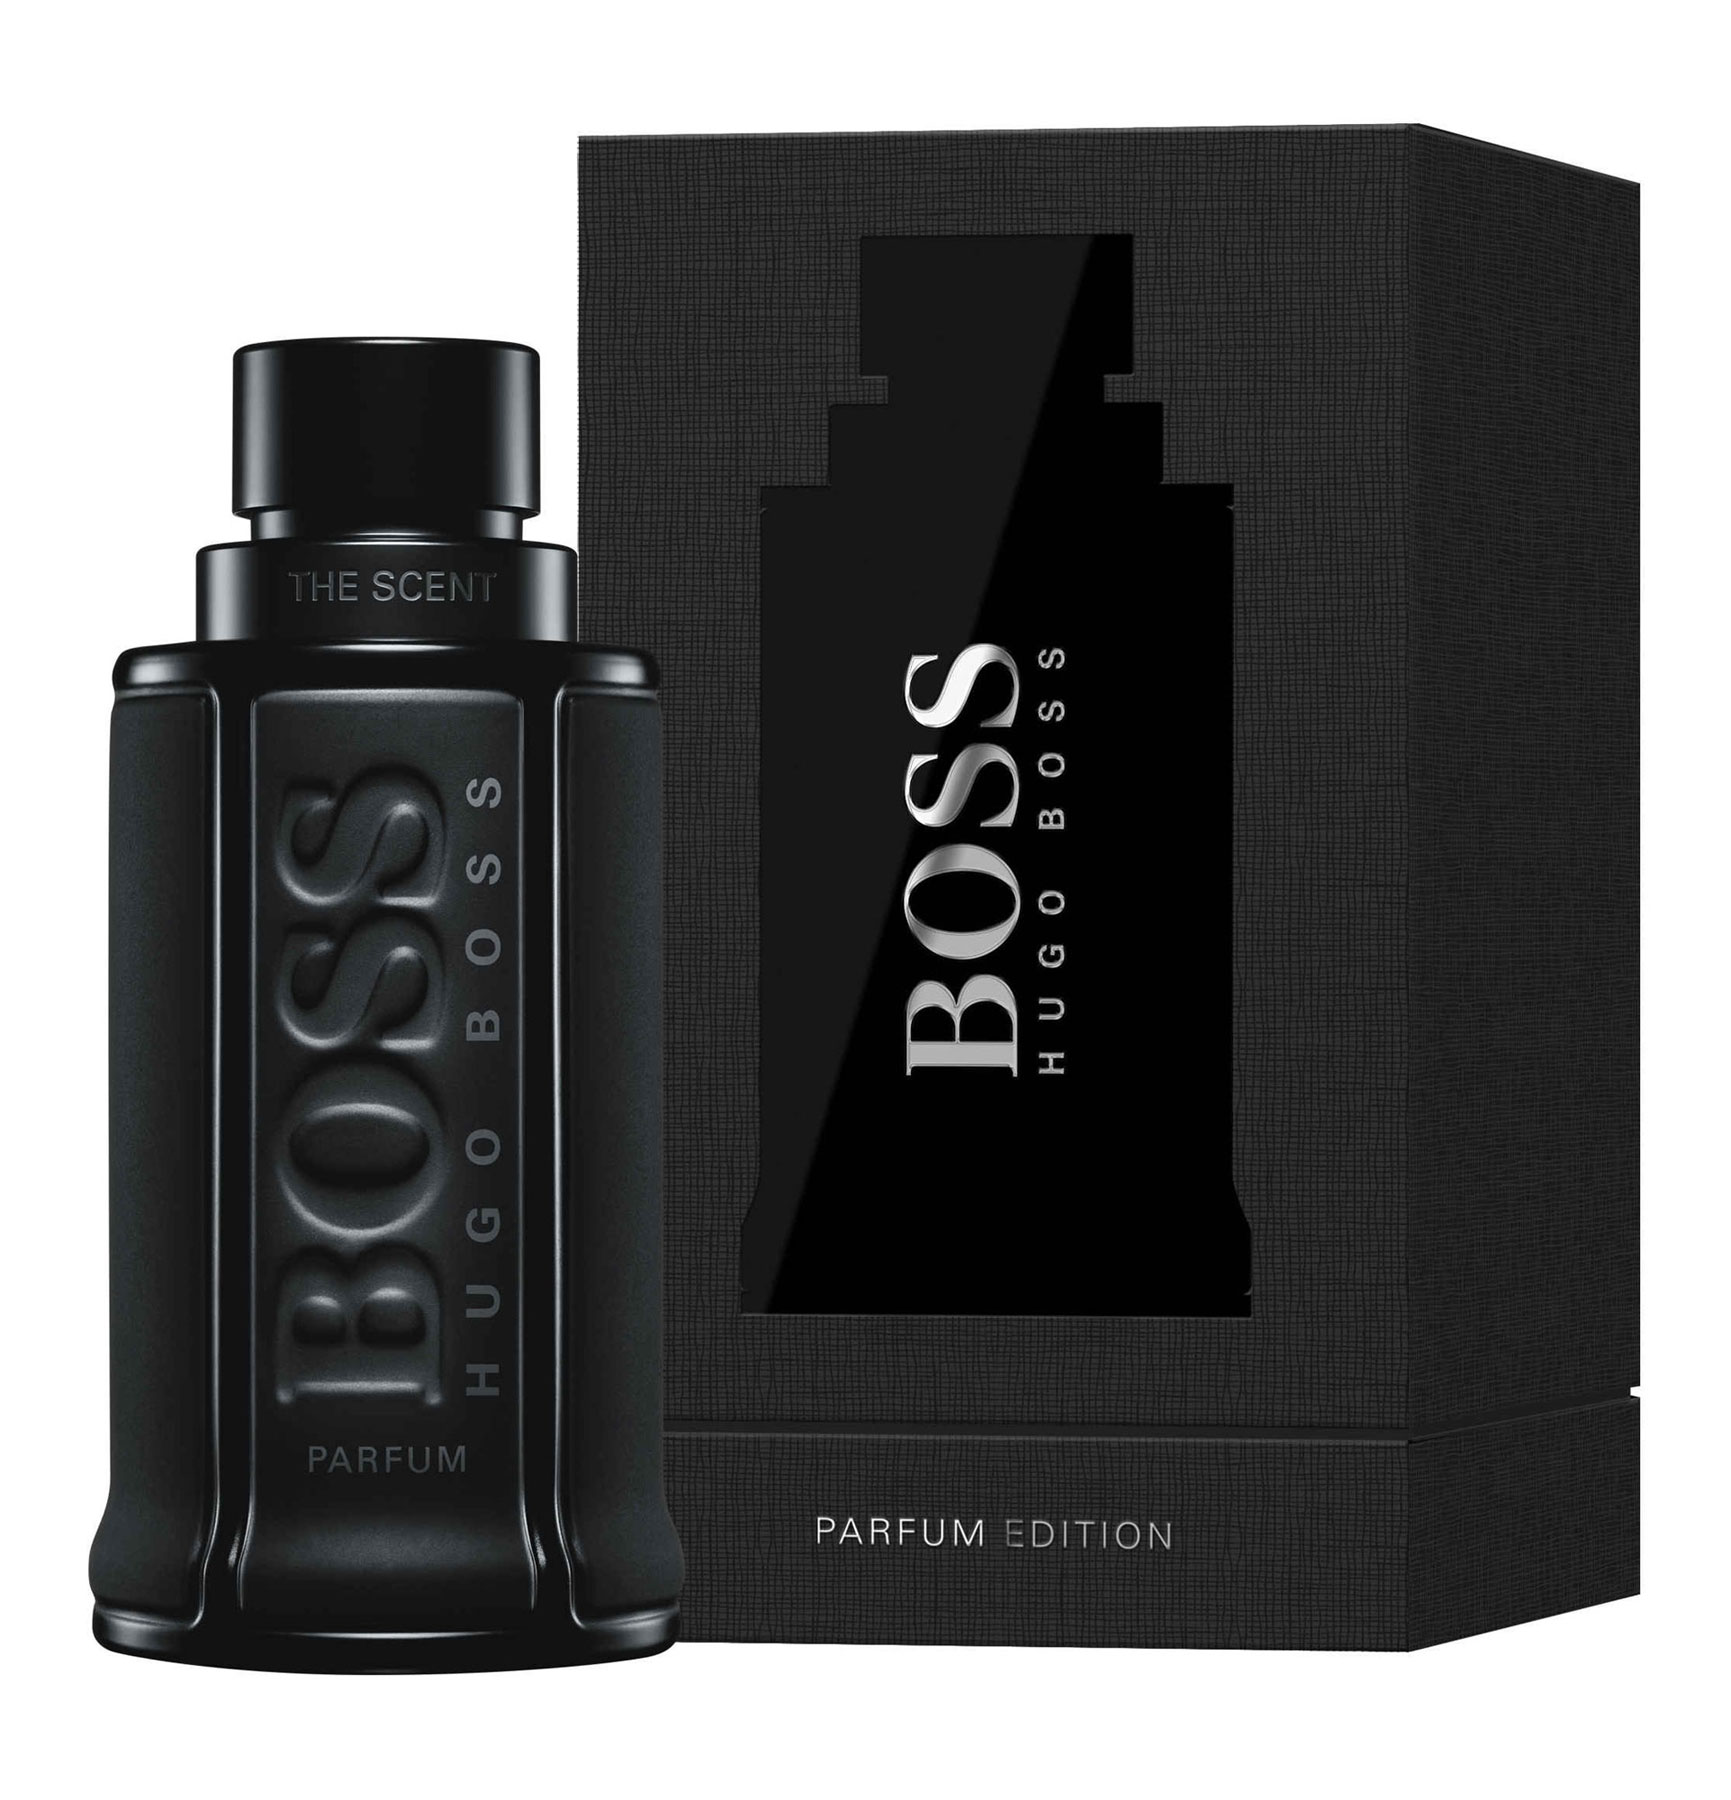 hugo boss new parfum